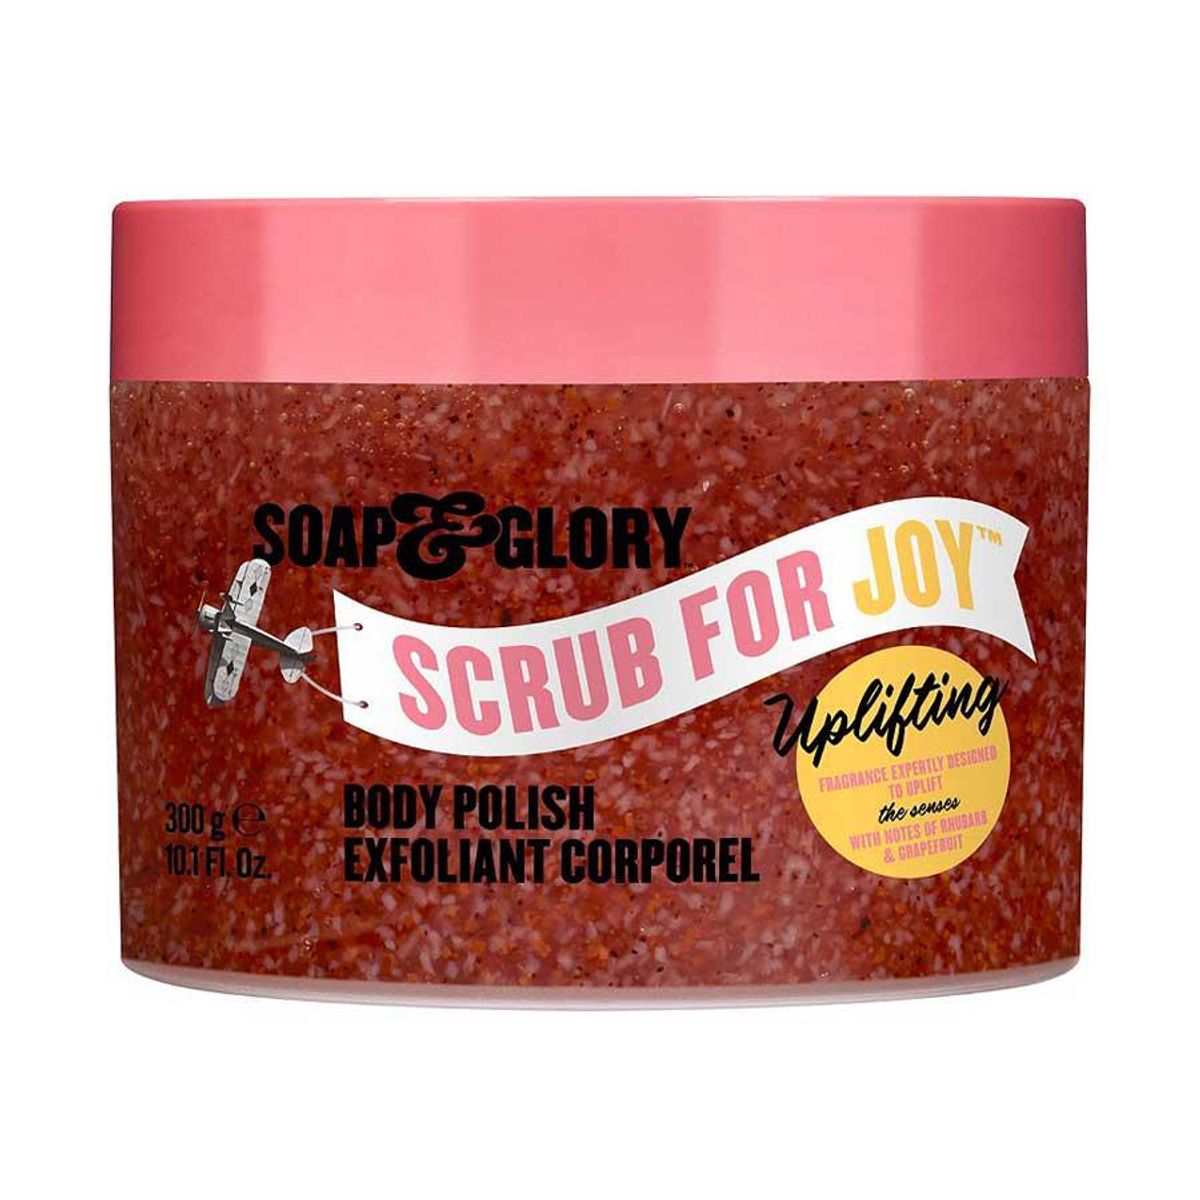 soap and glory uplifting scrub for joy body polish